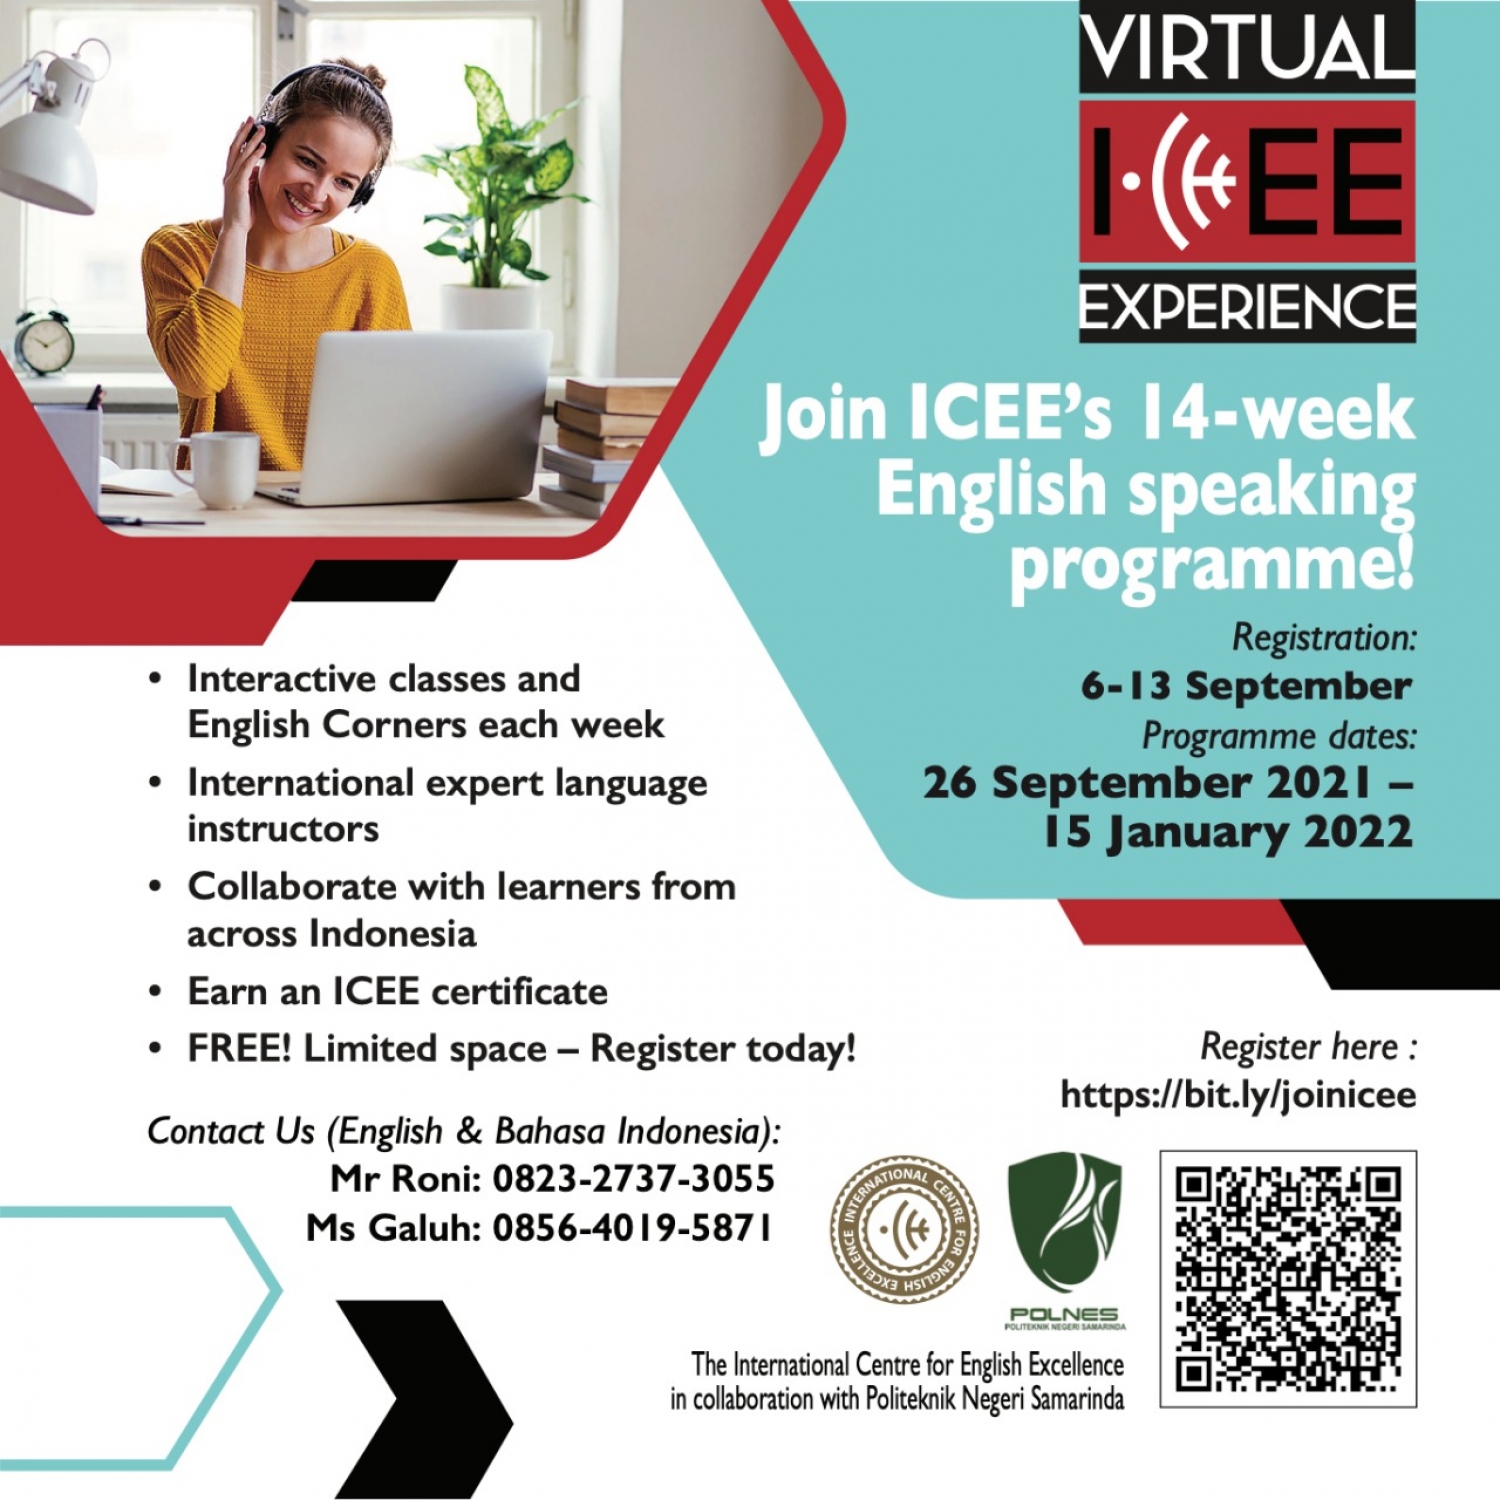 Viritual IECC Experience